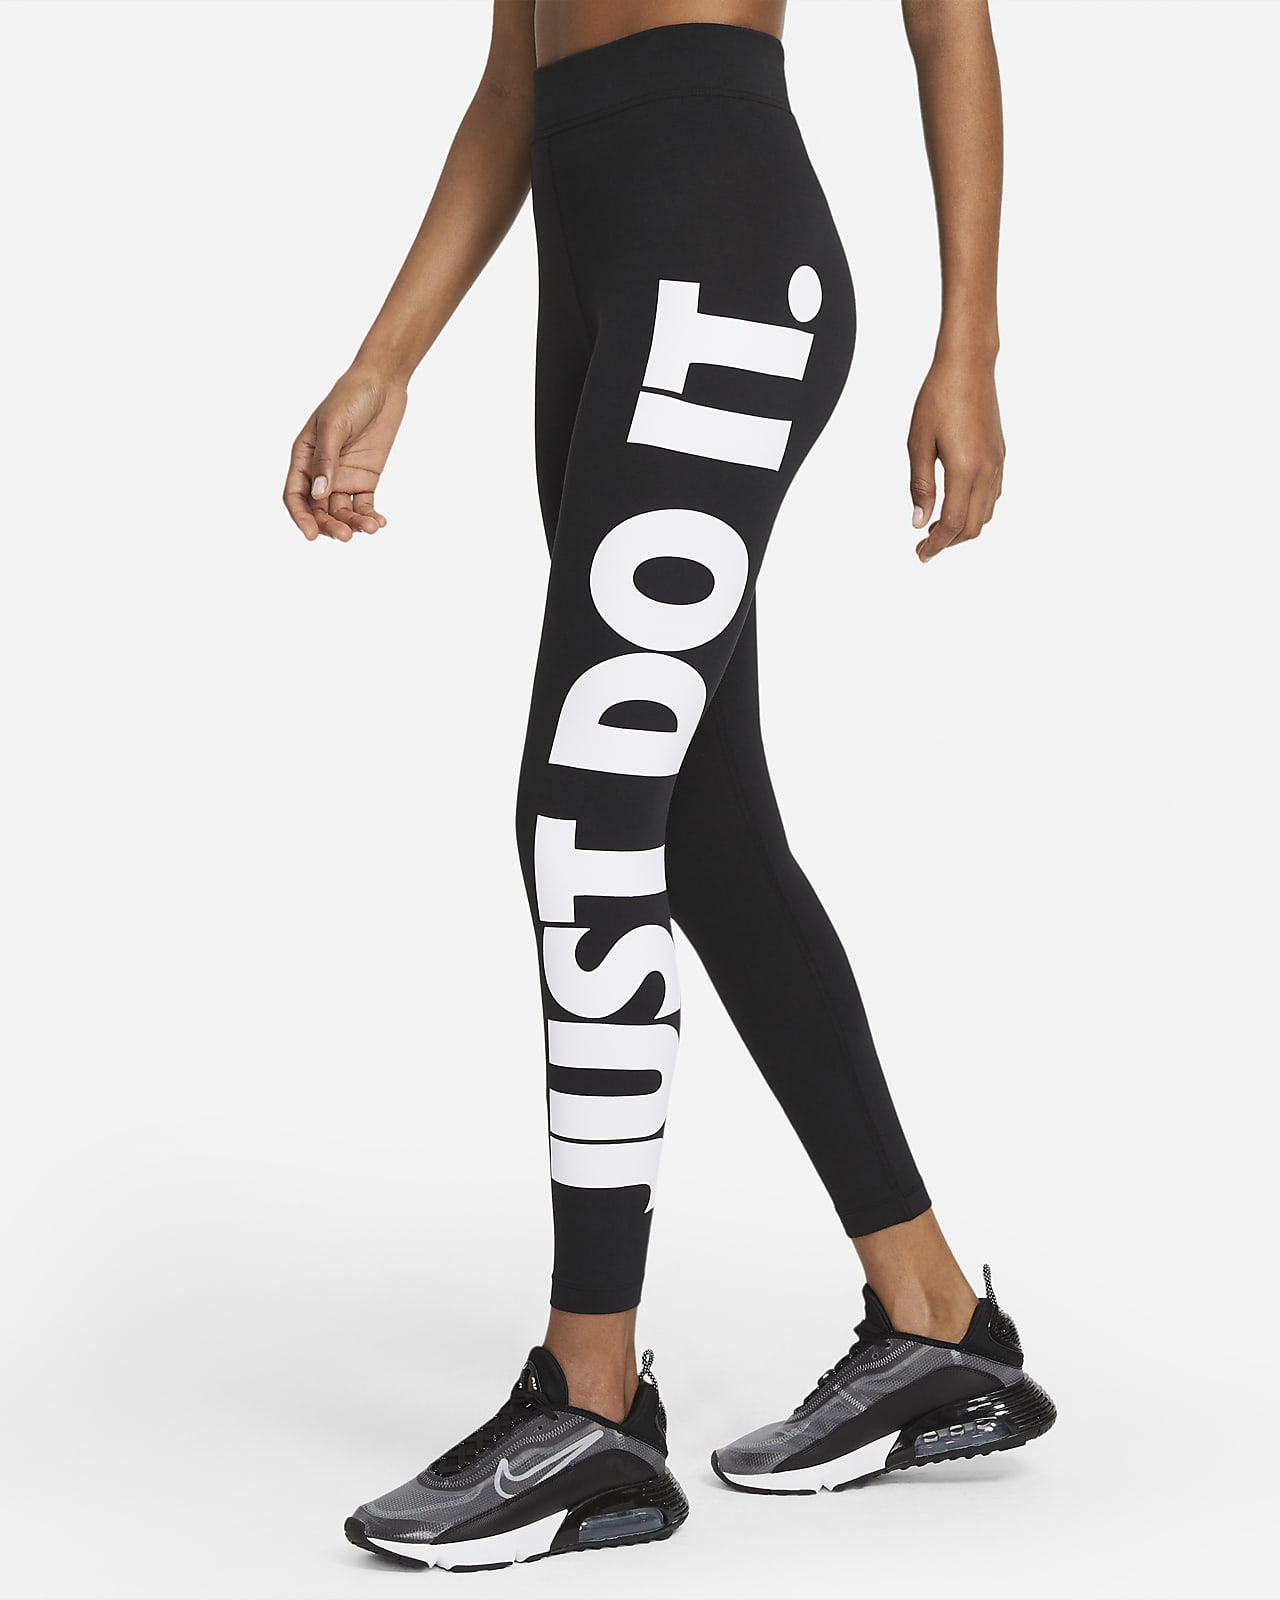 Nike Sportswear Essential Leggings de talle alto con estampado - Mujer